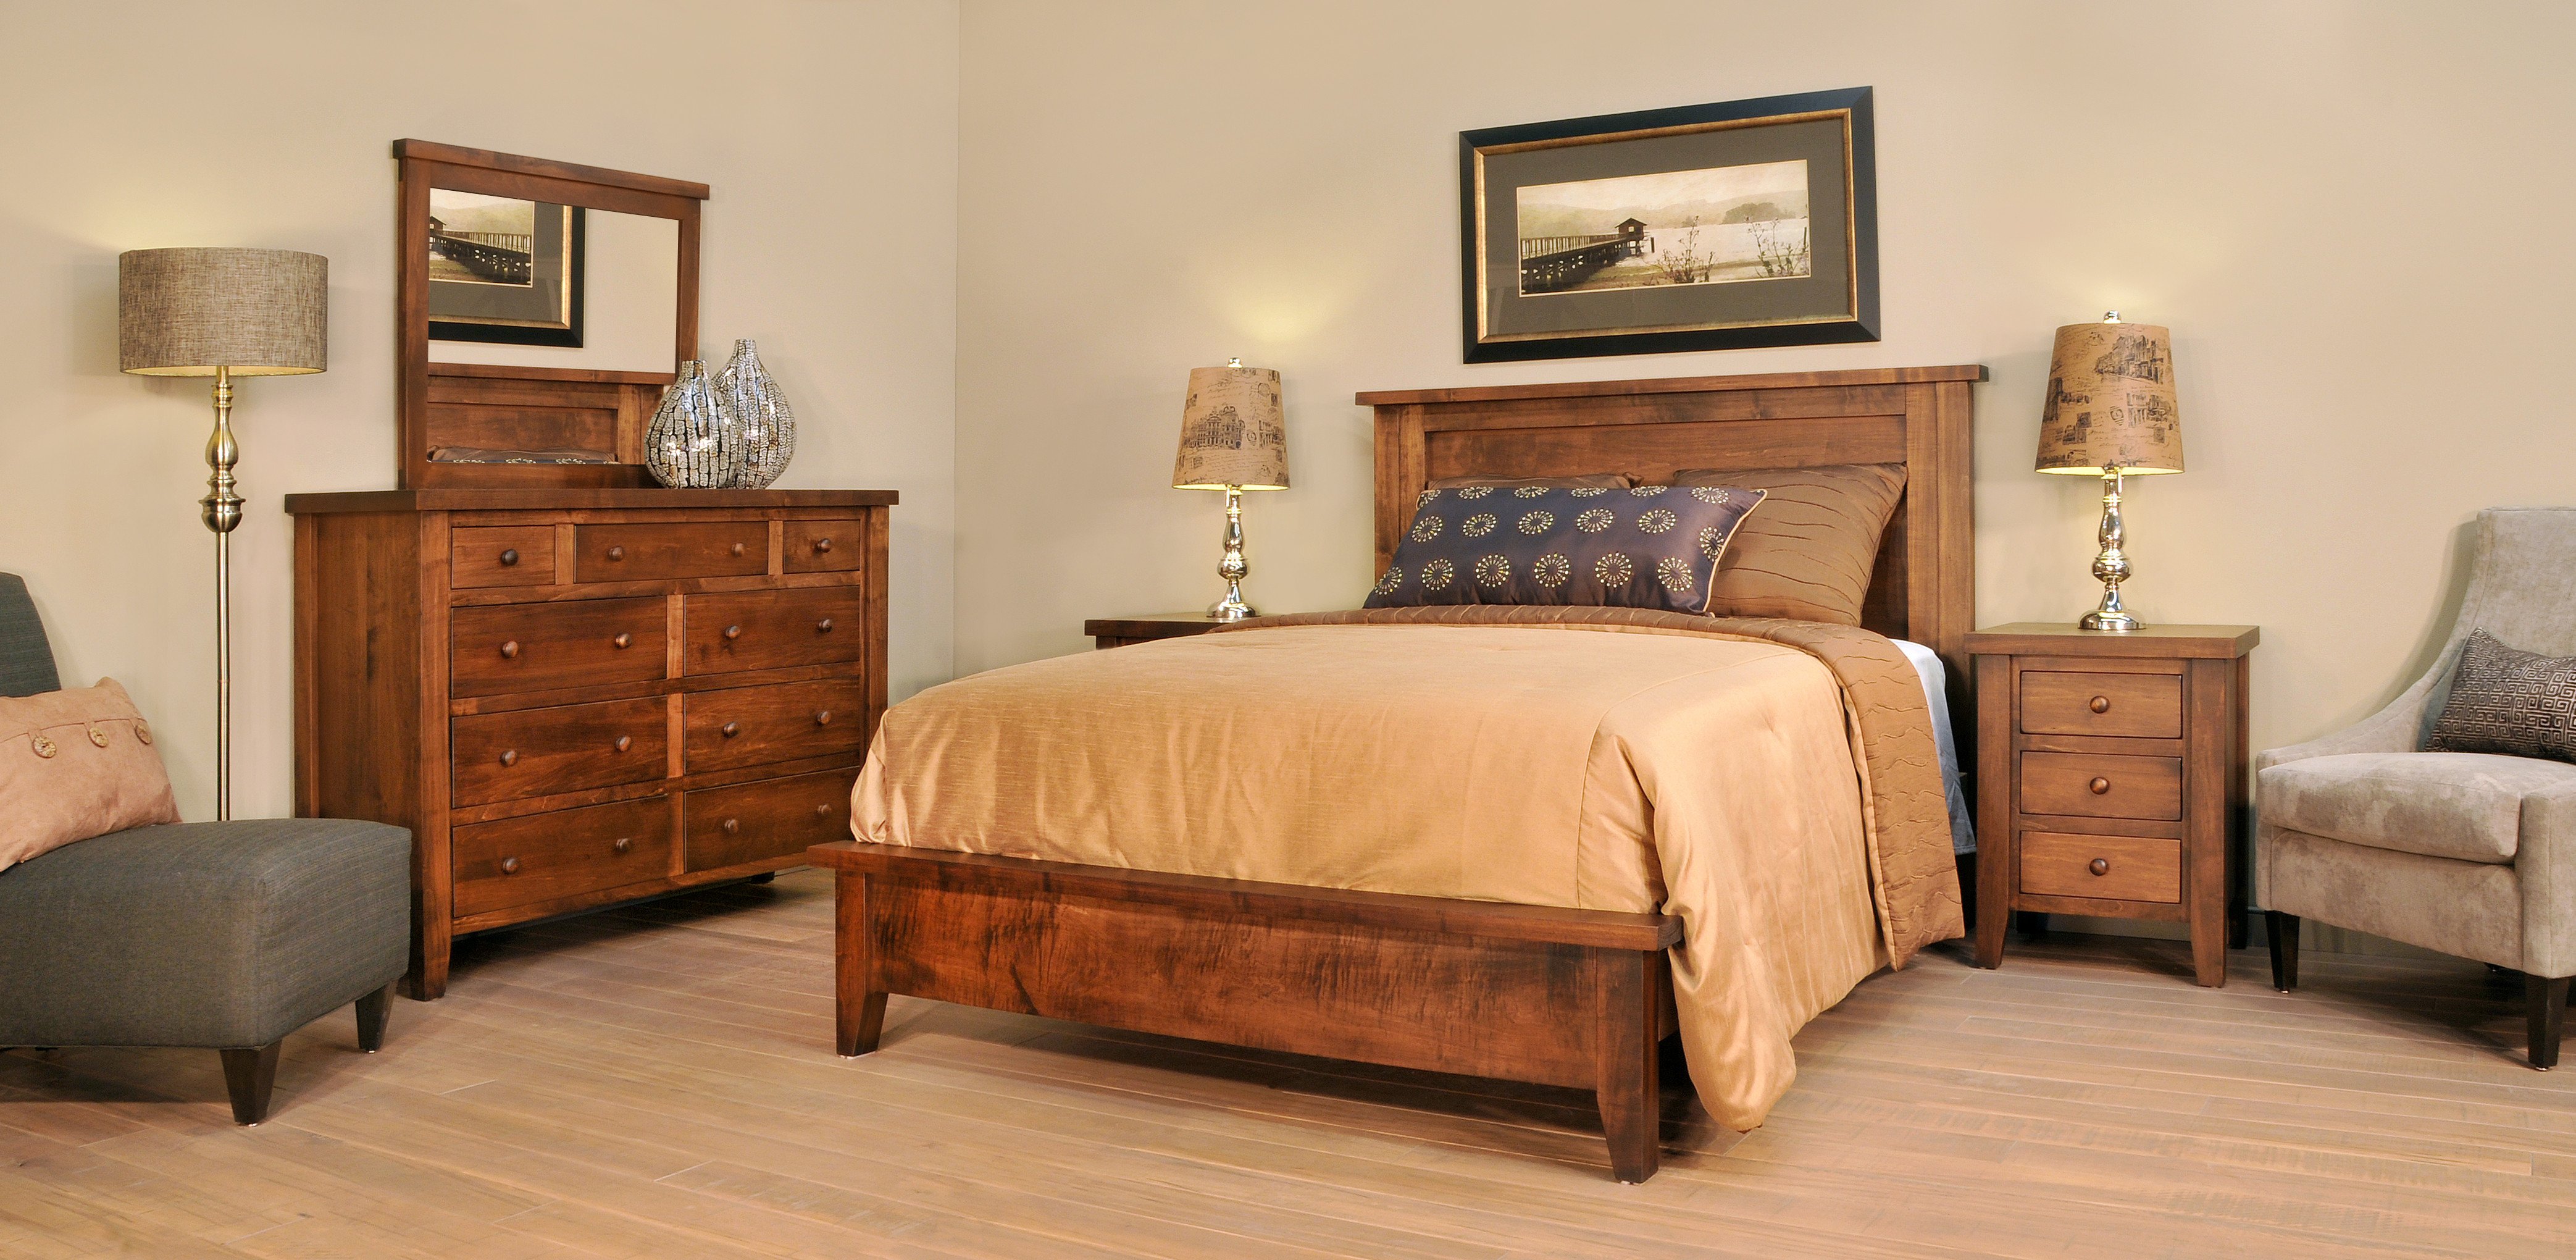 Solid Oak Bedroom Set Beautiful Ruff Sawn Farm House Bedroom Amish solid Wood